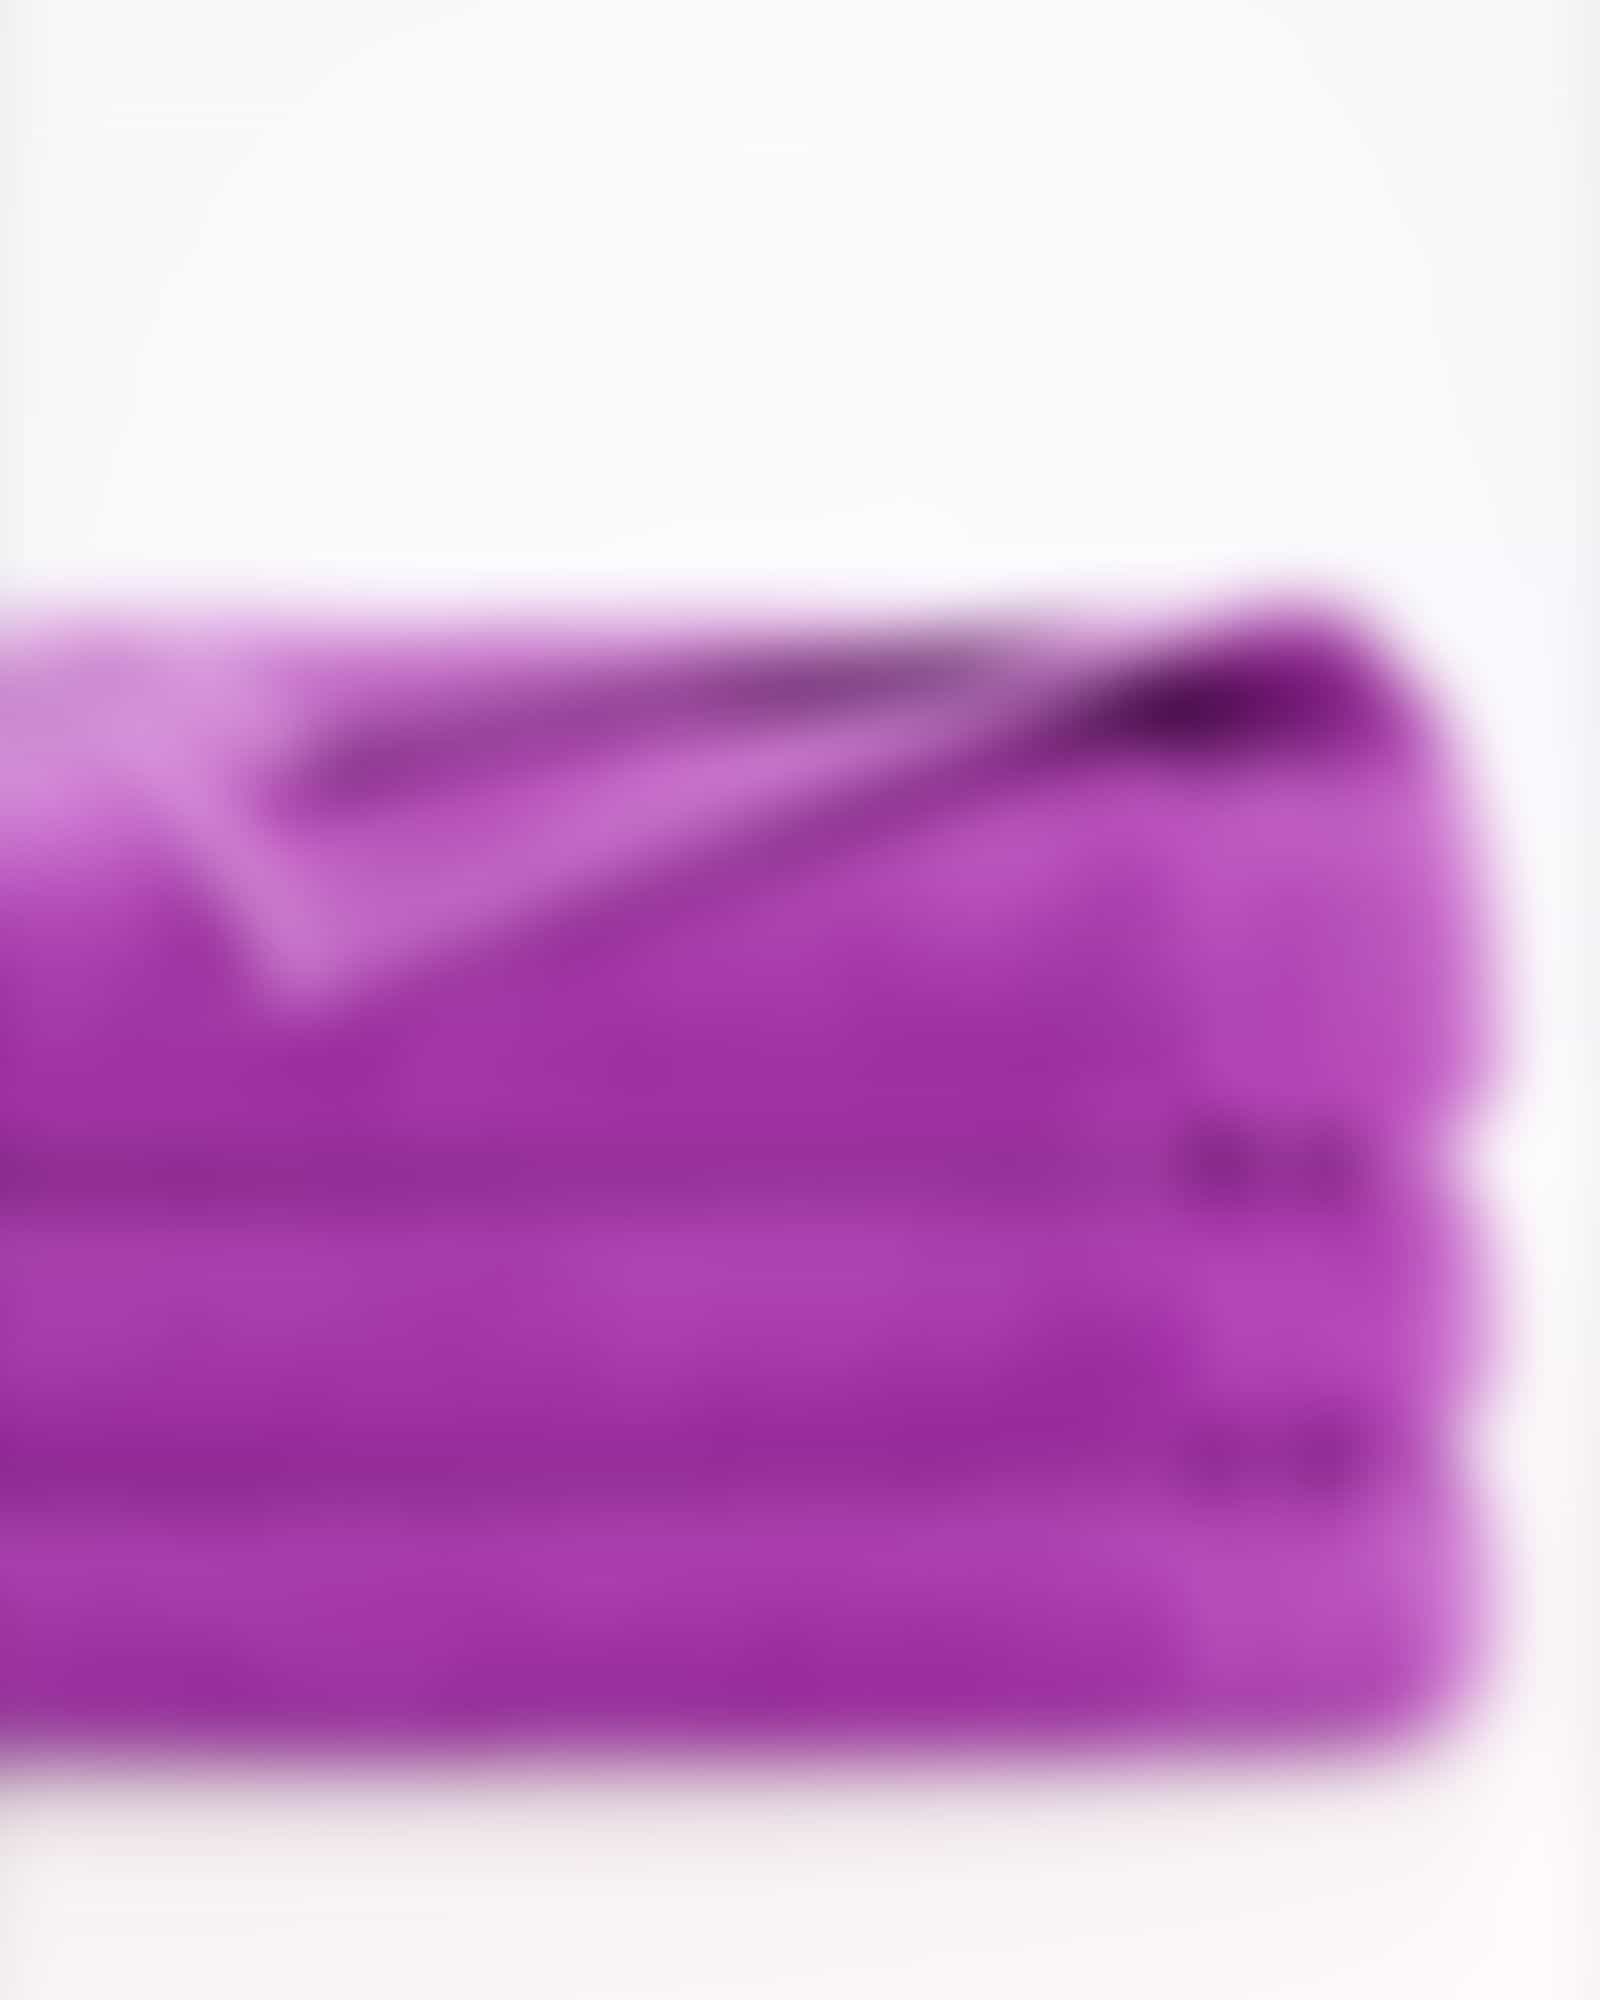 Vossen Handtücher Calypso Feeling - Farbe: lollipop - 8460 - Badetuch 100x150 cm Detailbild 2